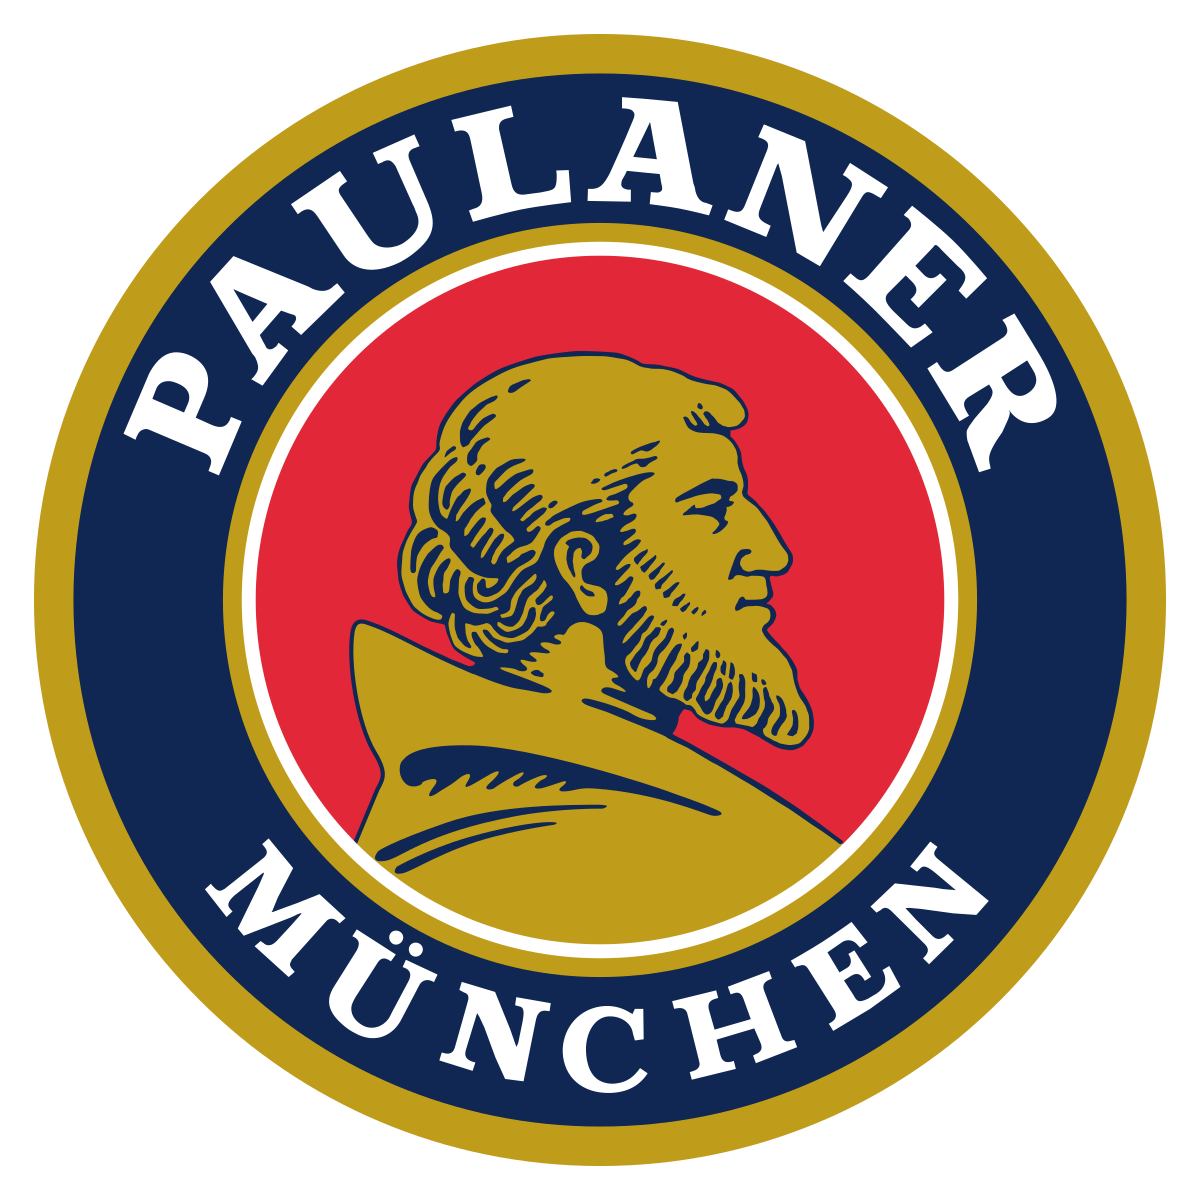 Paulaner_(Brauerei)_logo.svg.png